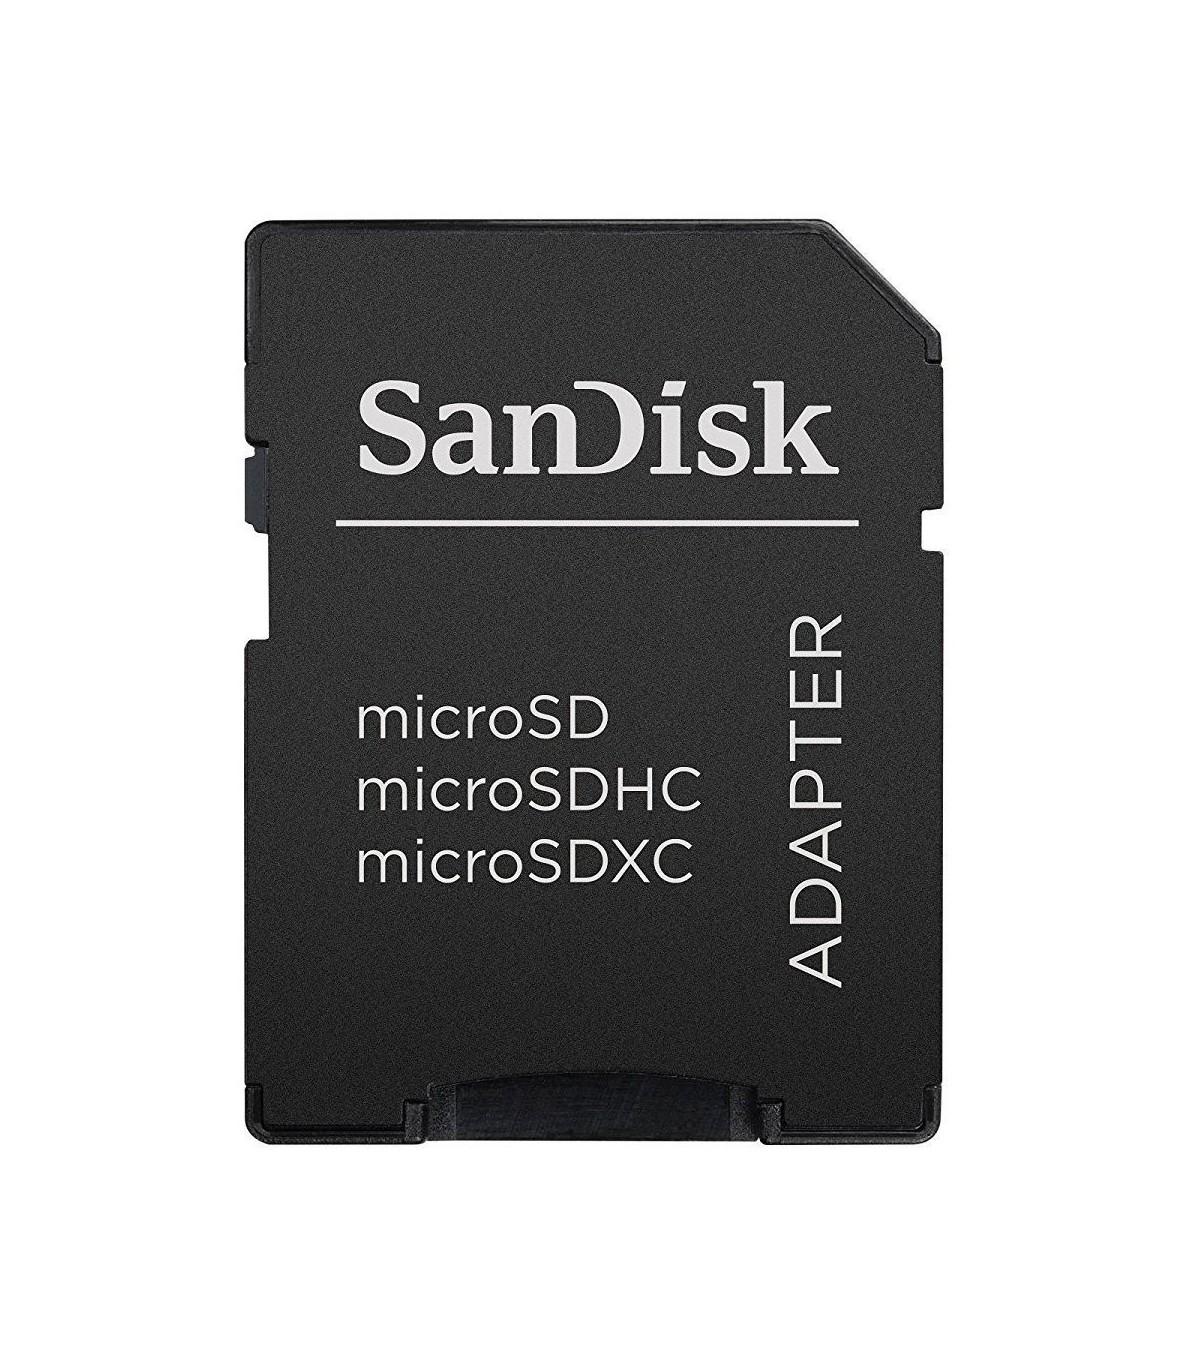 Carte Micro SD et Adaptateur